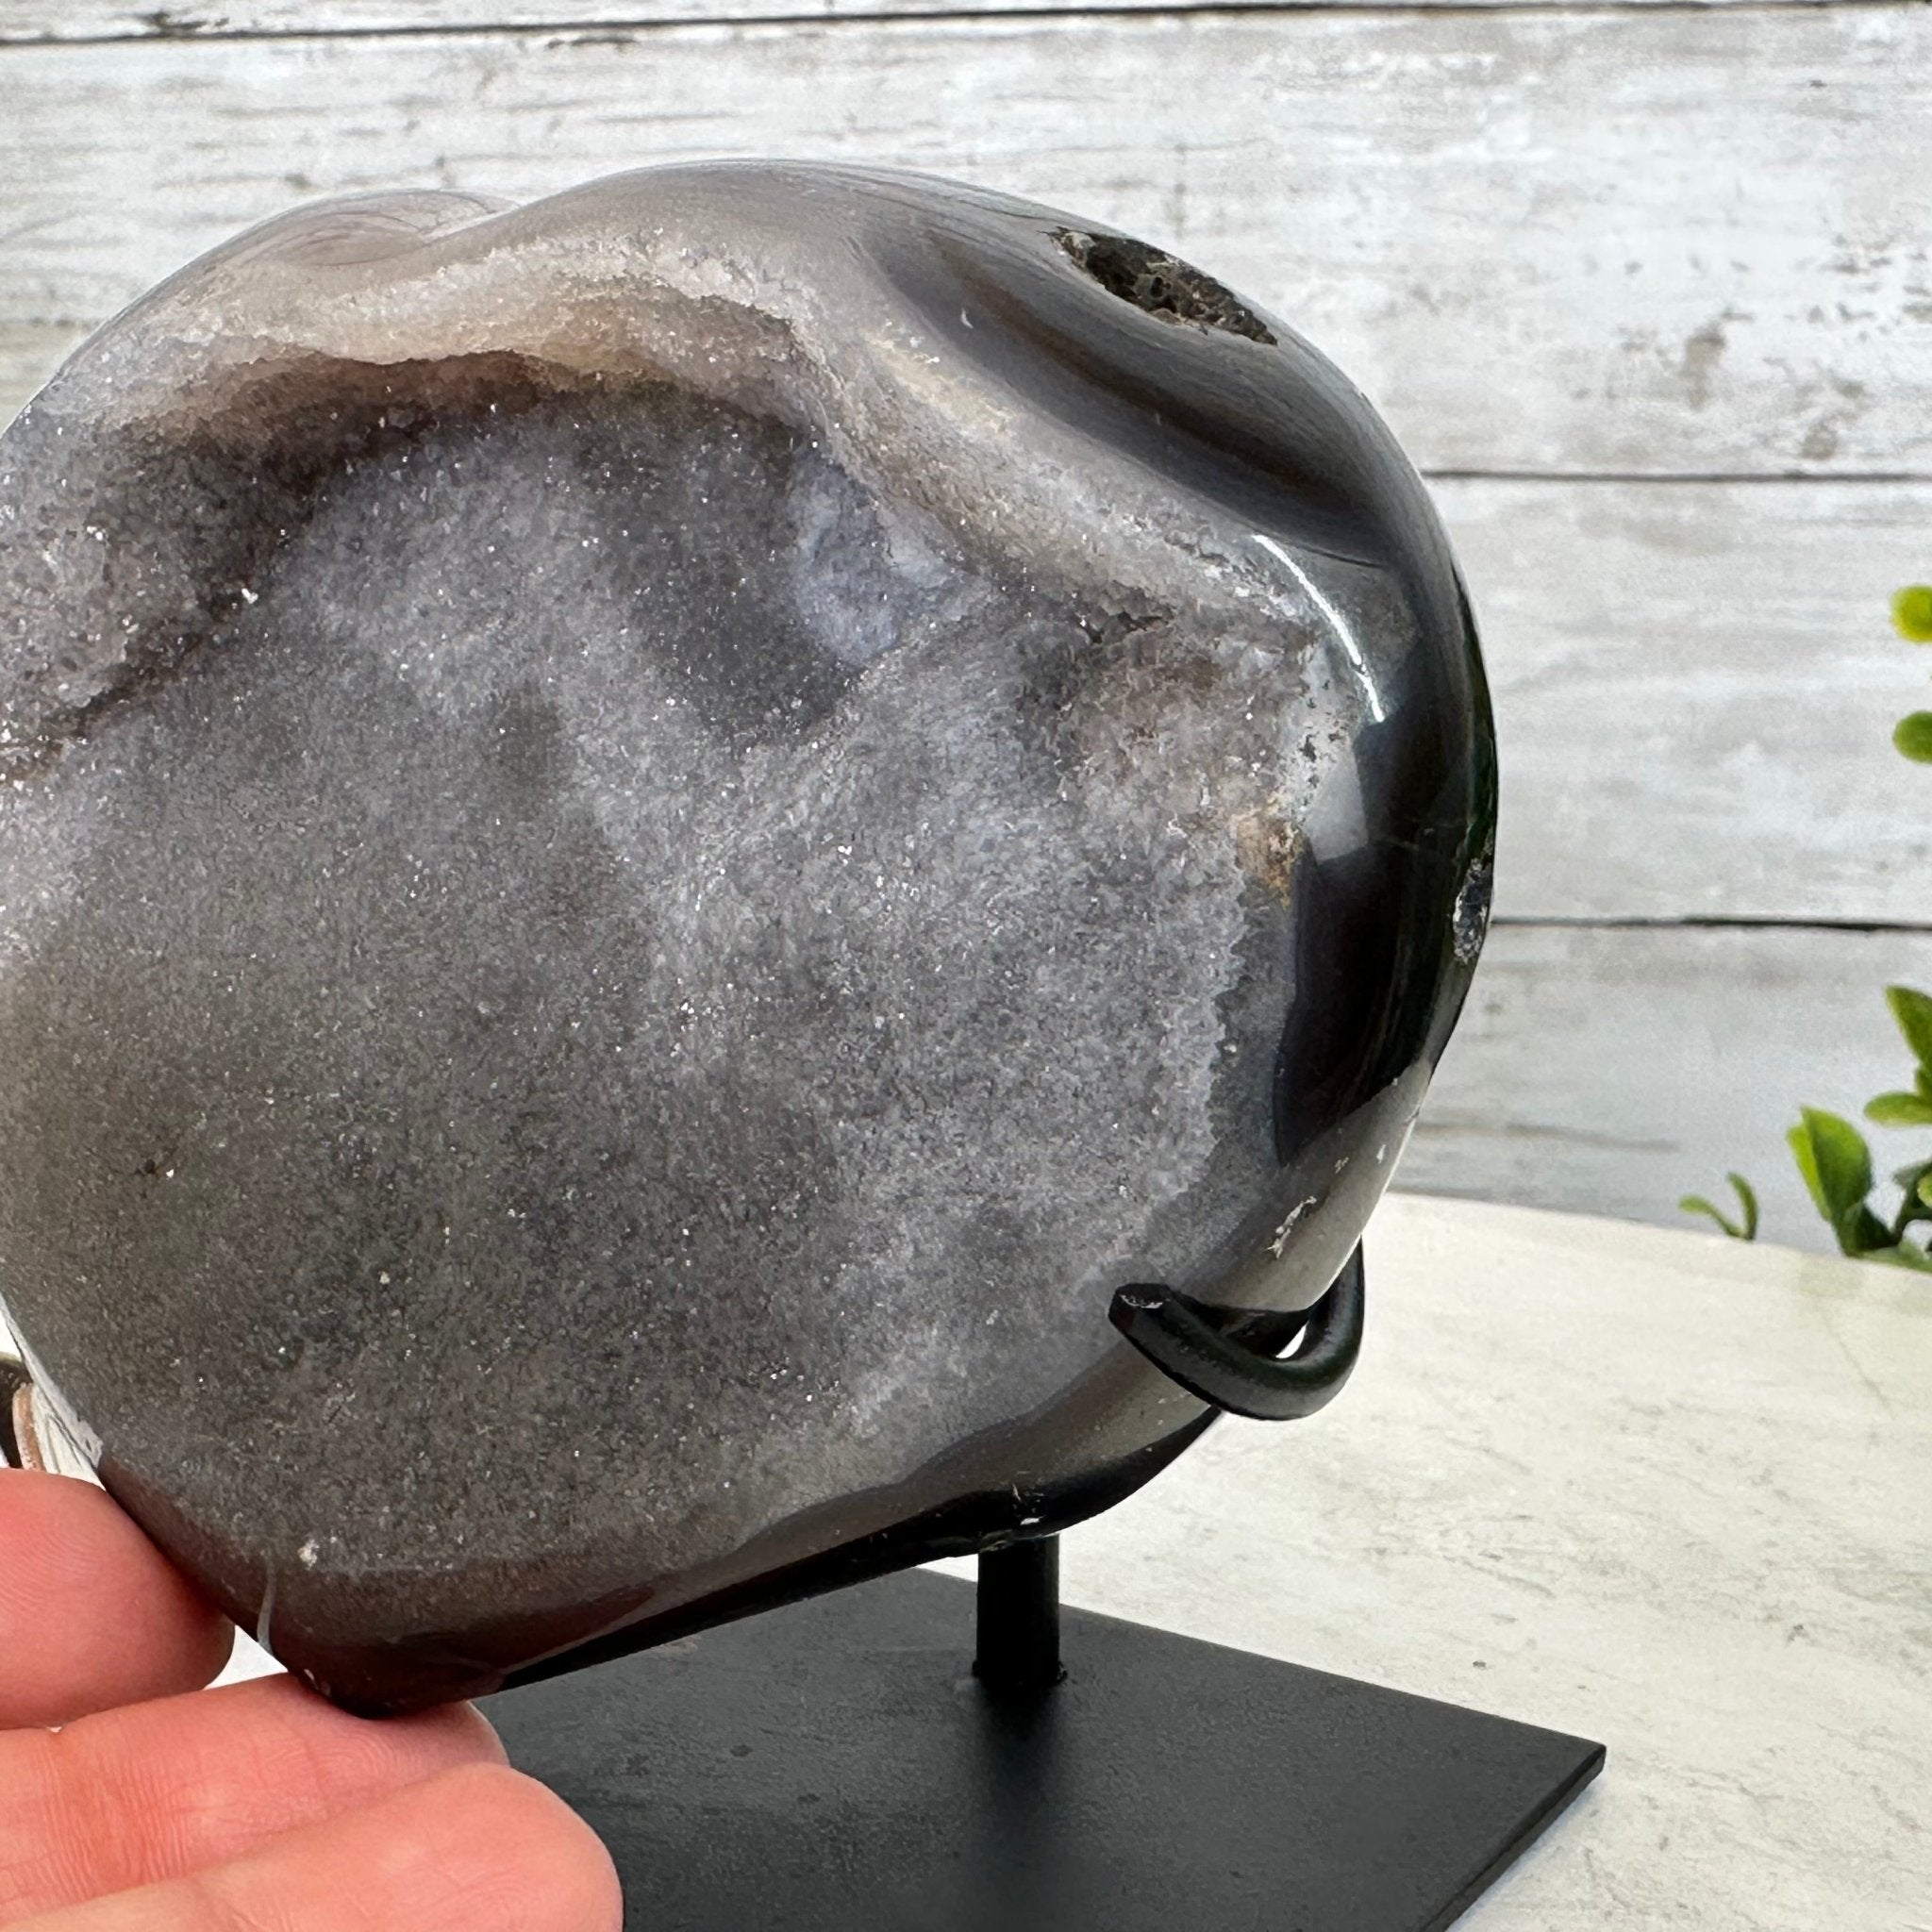 Polished Agate Heart Geode on a Metal Stand, 1.9 lbs & 4.5" Tall, Model #5468-0033 by Brazil Gems - Brazil GemsBrazil GemsPolished Agate Heart Geode on a Metal Stand, 1.9 lbs & 4.5" Tall, Model #5468-0033 by Brazil GemsHearts5468-0033